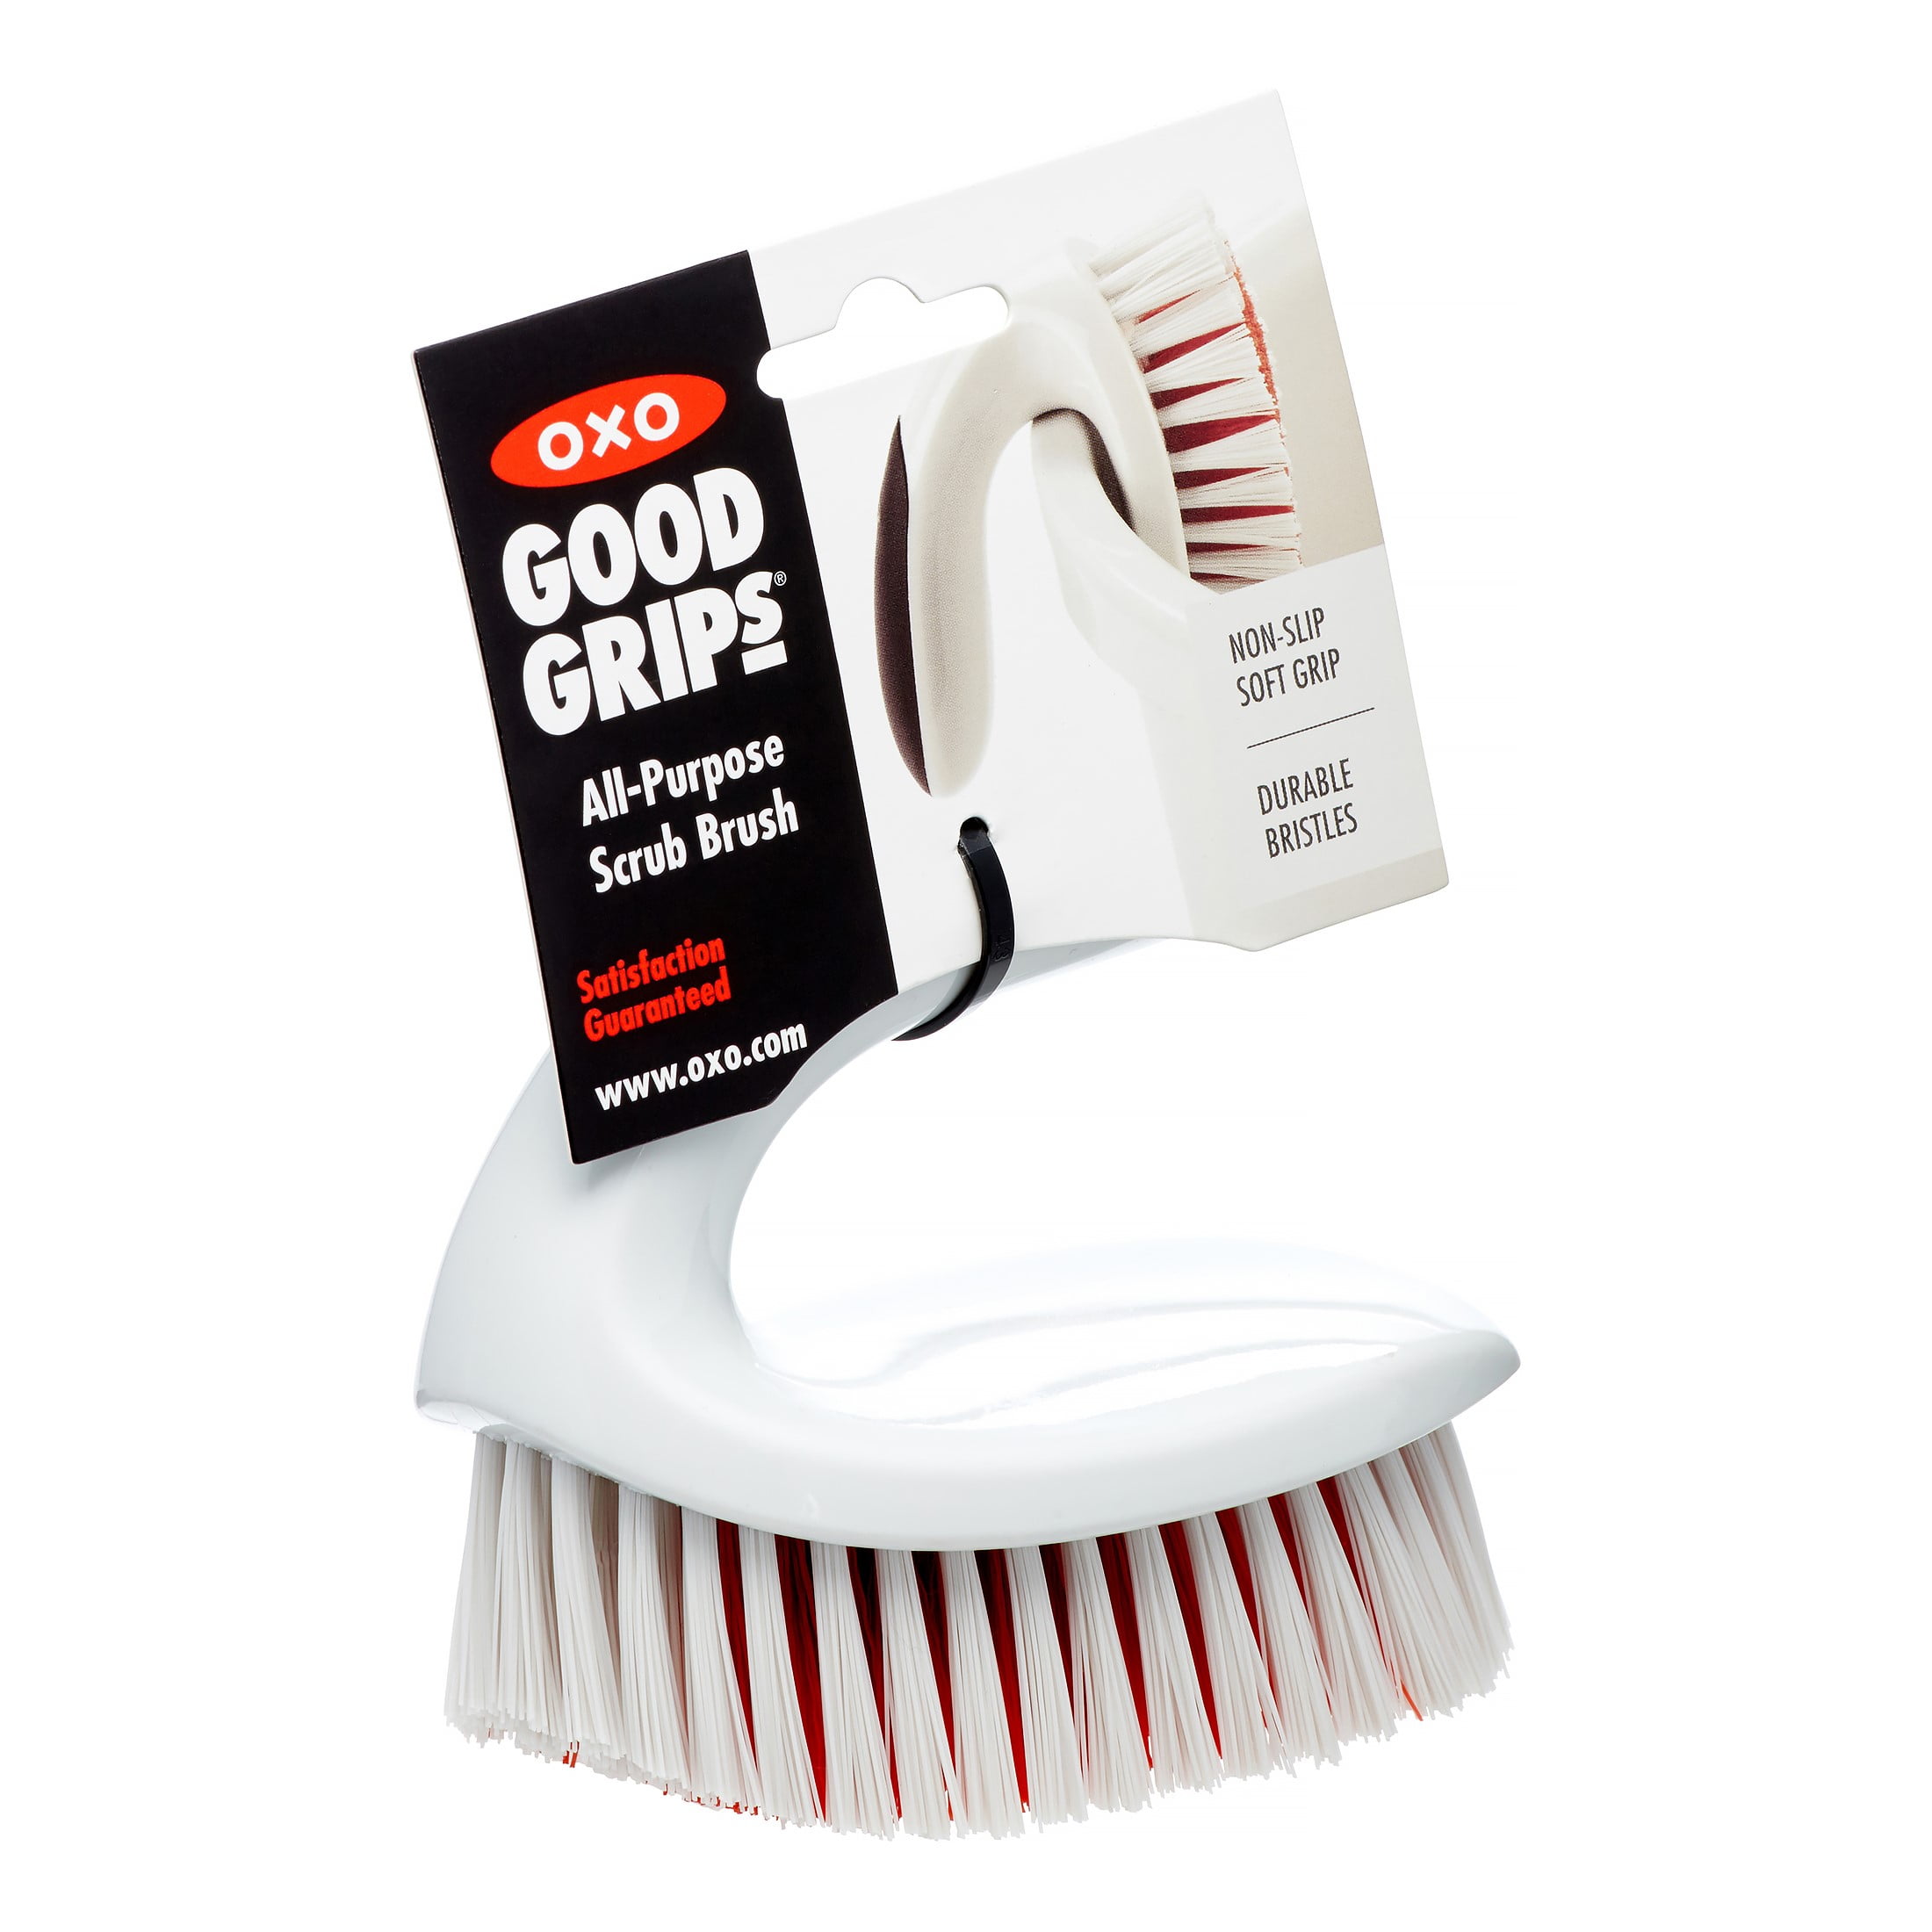 OXO Good Grips All Purpose Scrub Brush White/Black